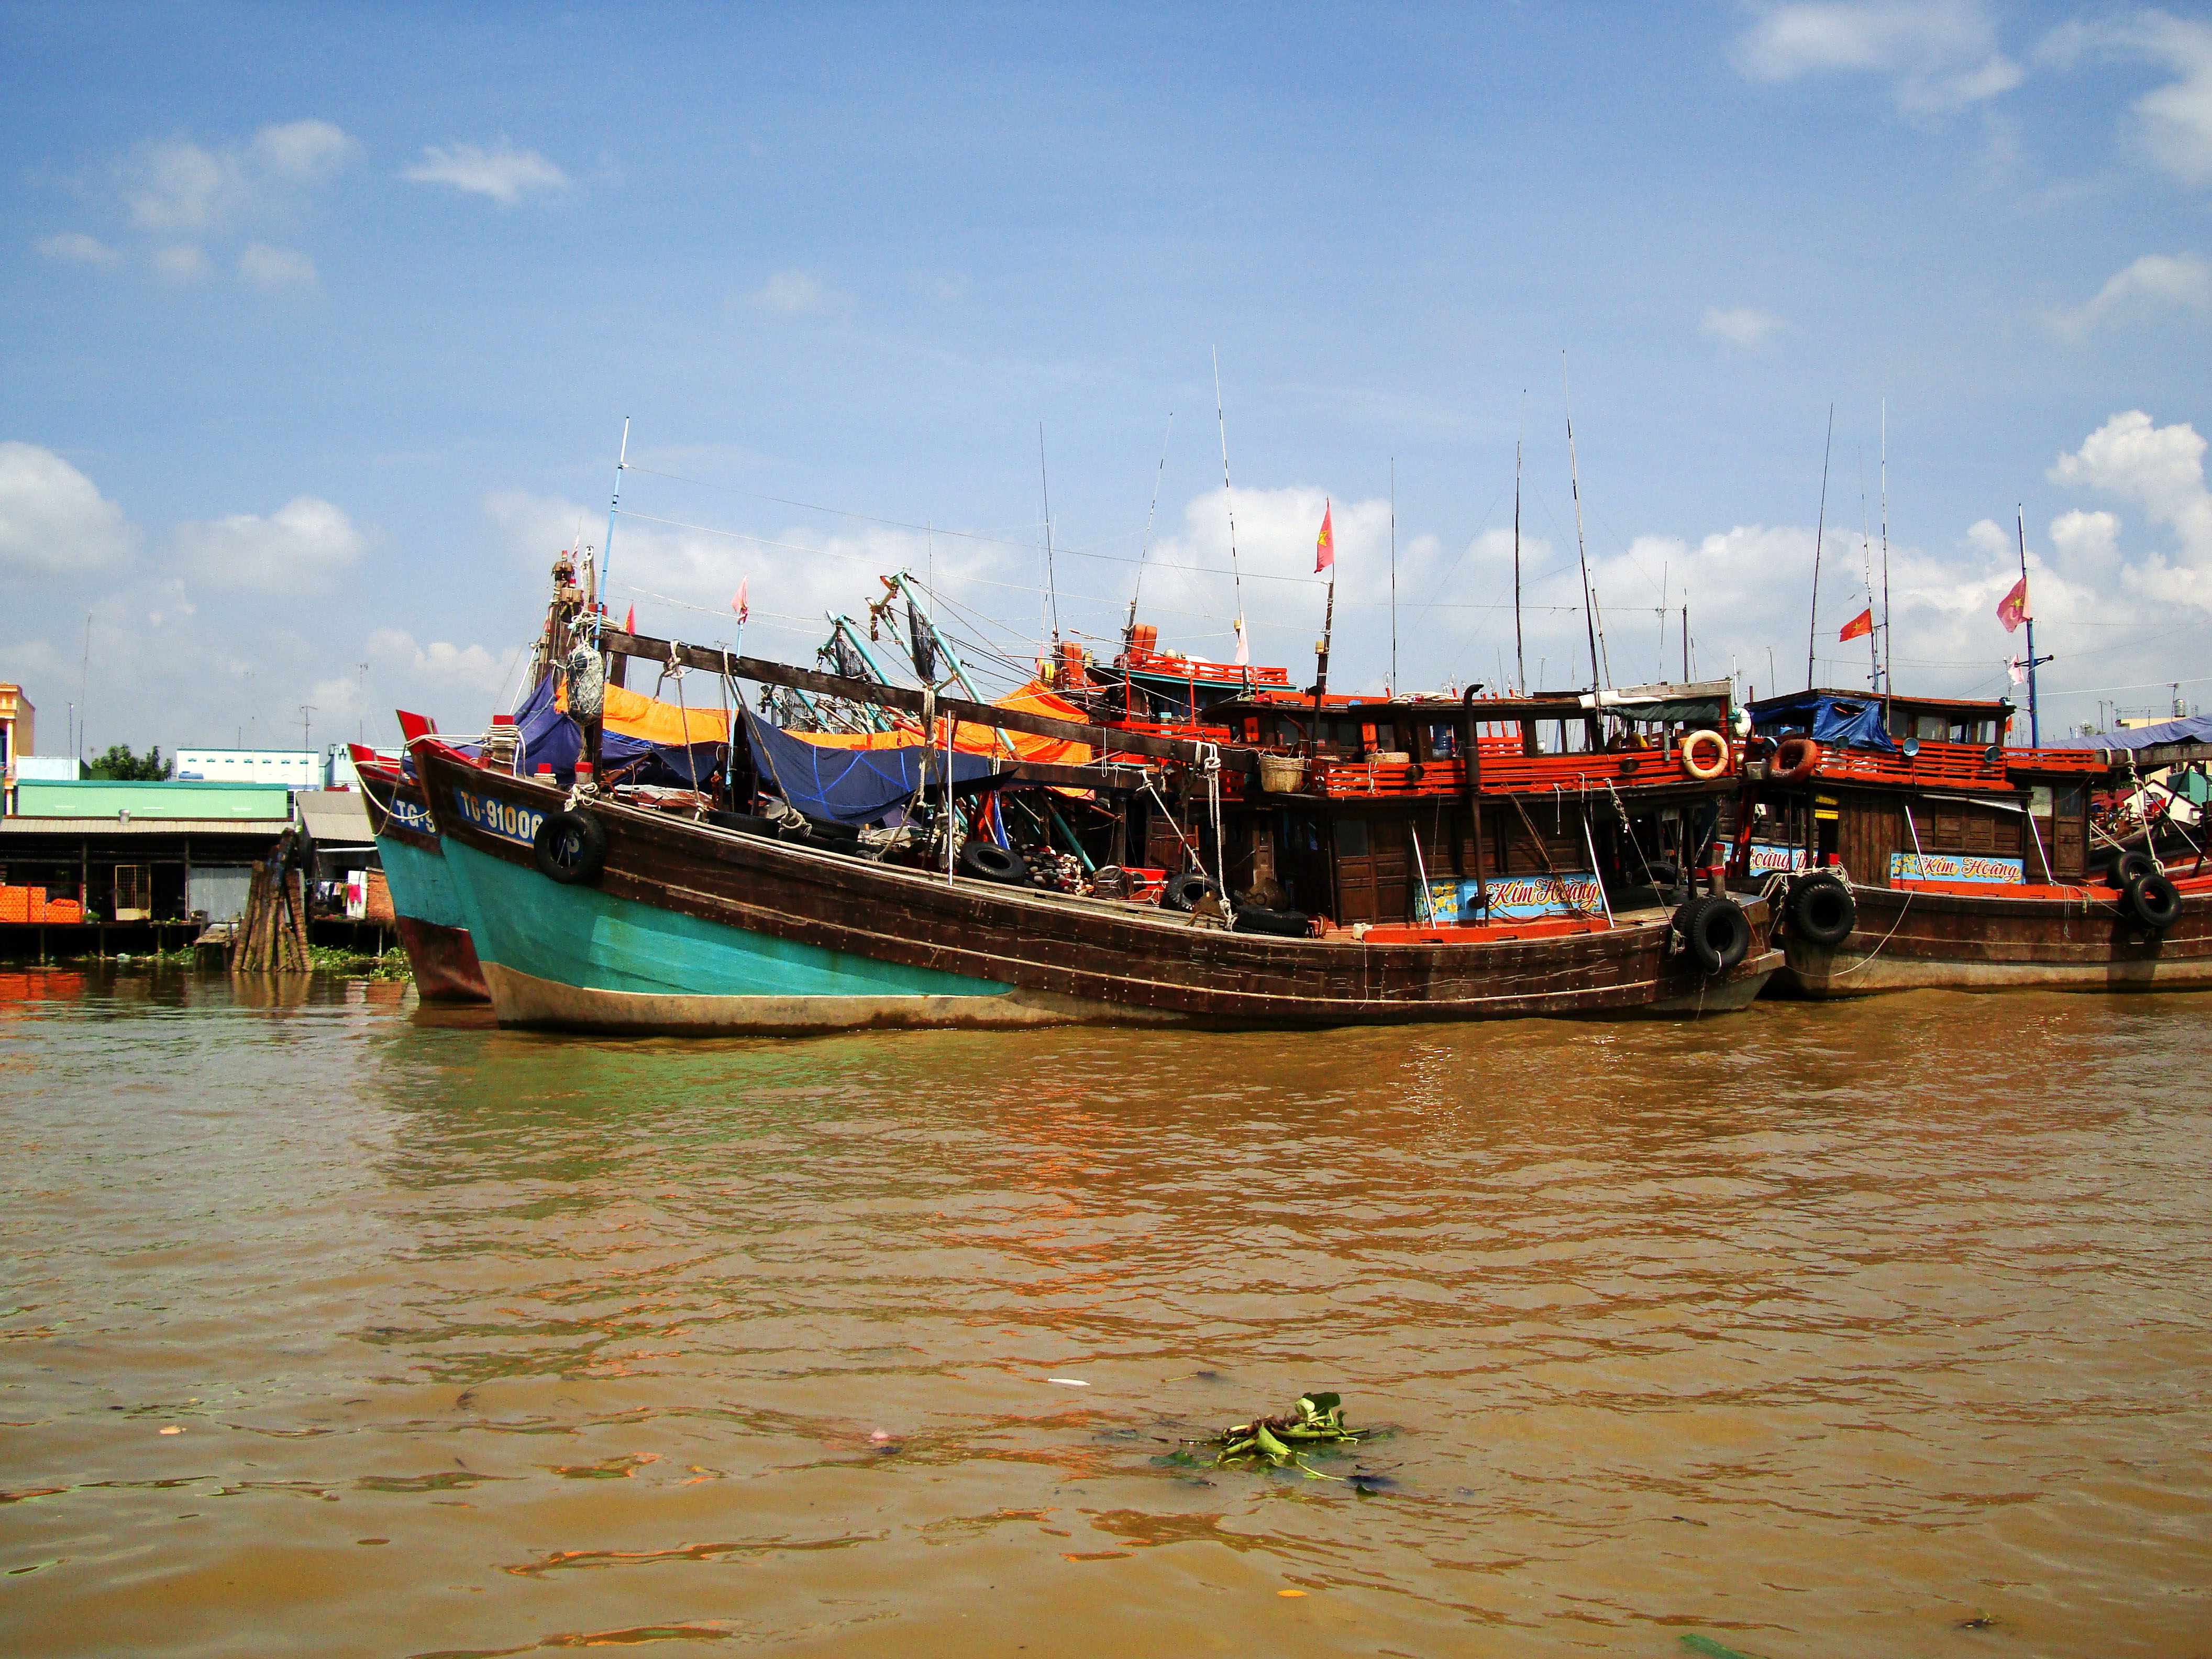 Mekong Delta Saigon river Vietnamese fishing boats Nov 2009 02